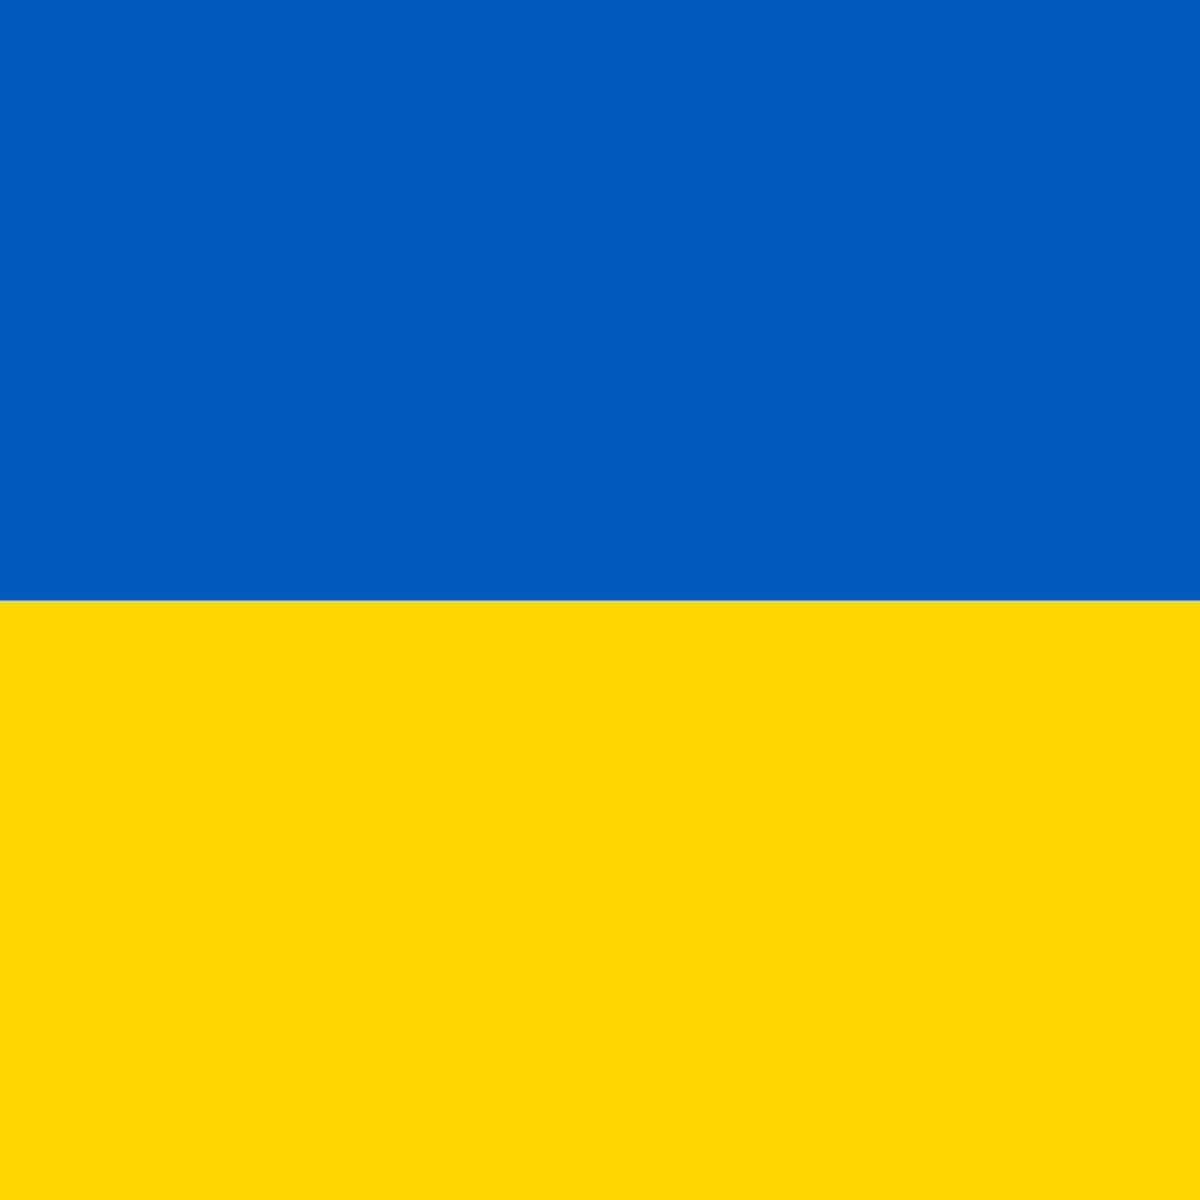 Ukrainian flag square format